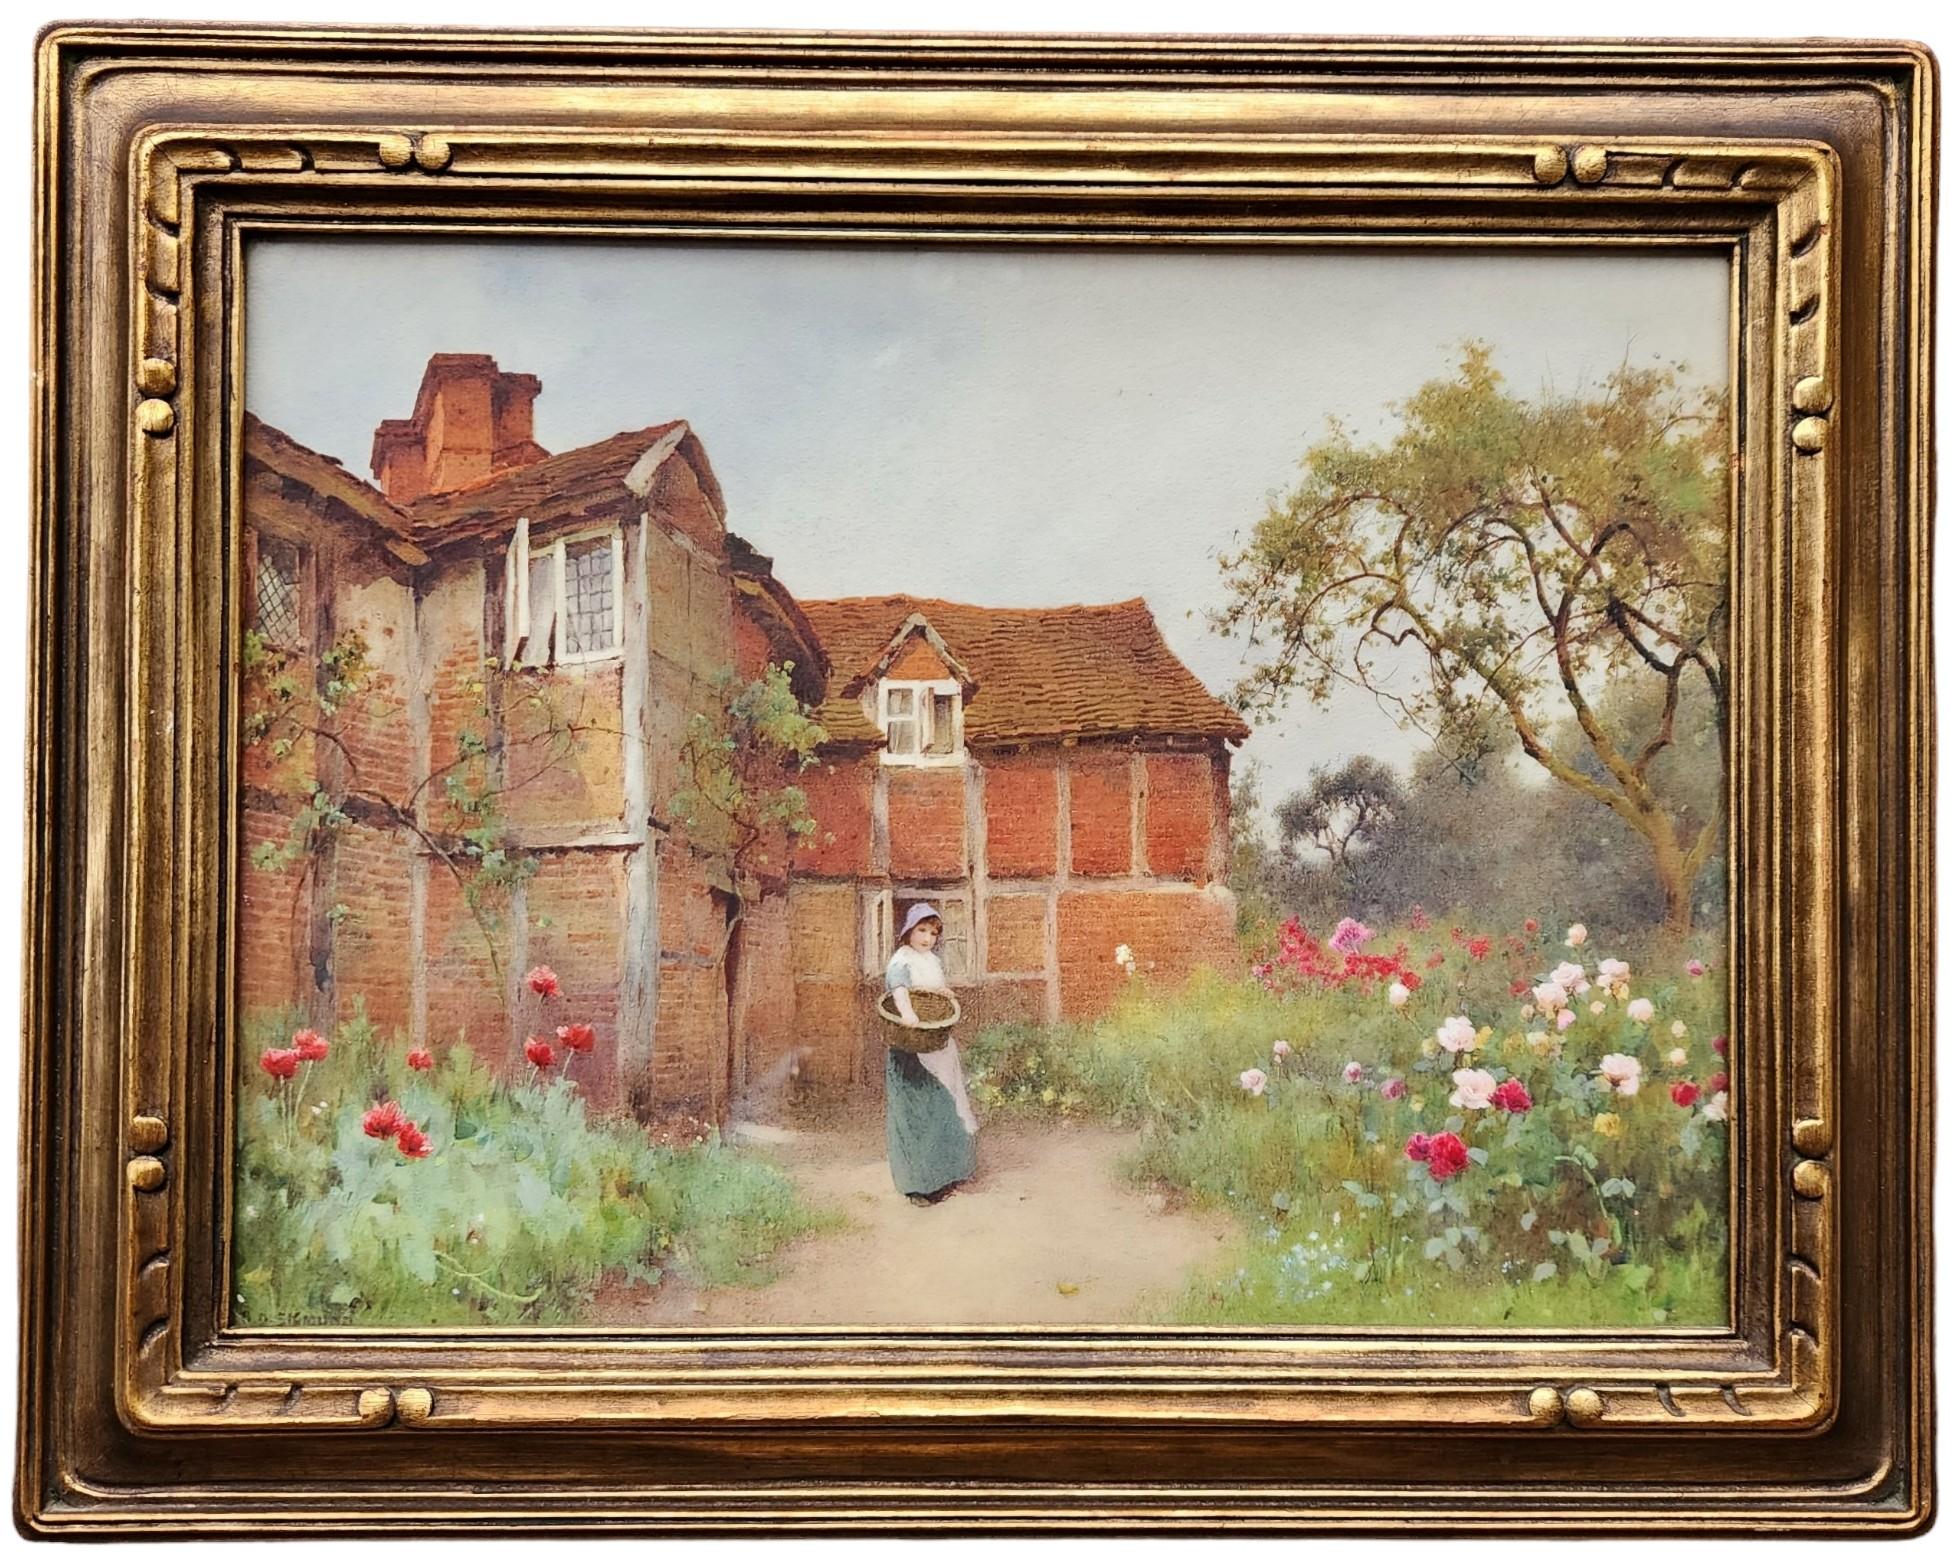 Benjamin Sigmund Landscape Art - Girl in The Garden, Wonderful English Watercolor Flowers, Roses, Surrey Cottage